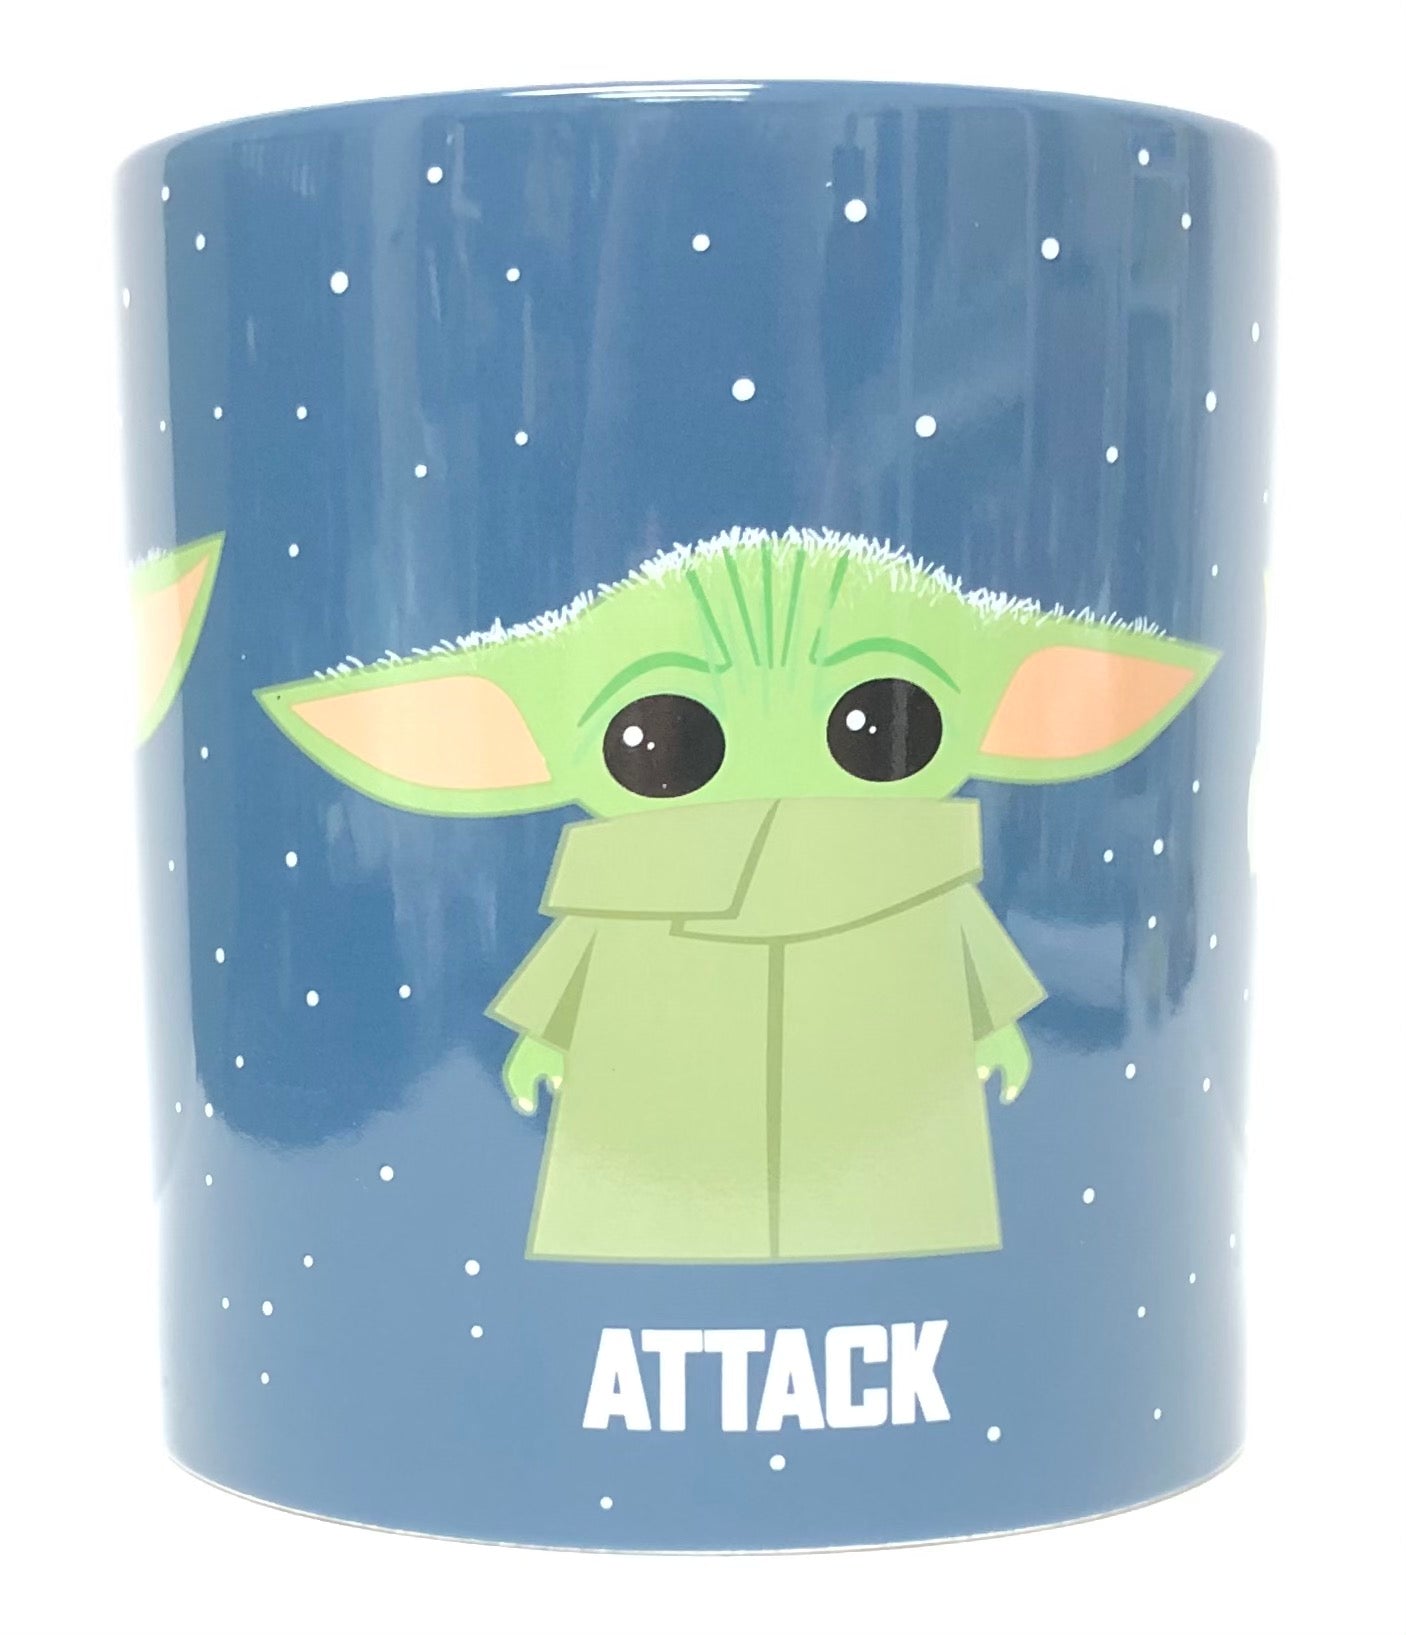 Star Wars Baby Yoda kopje